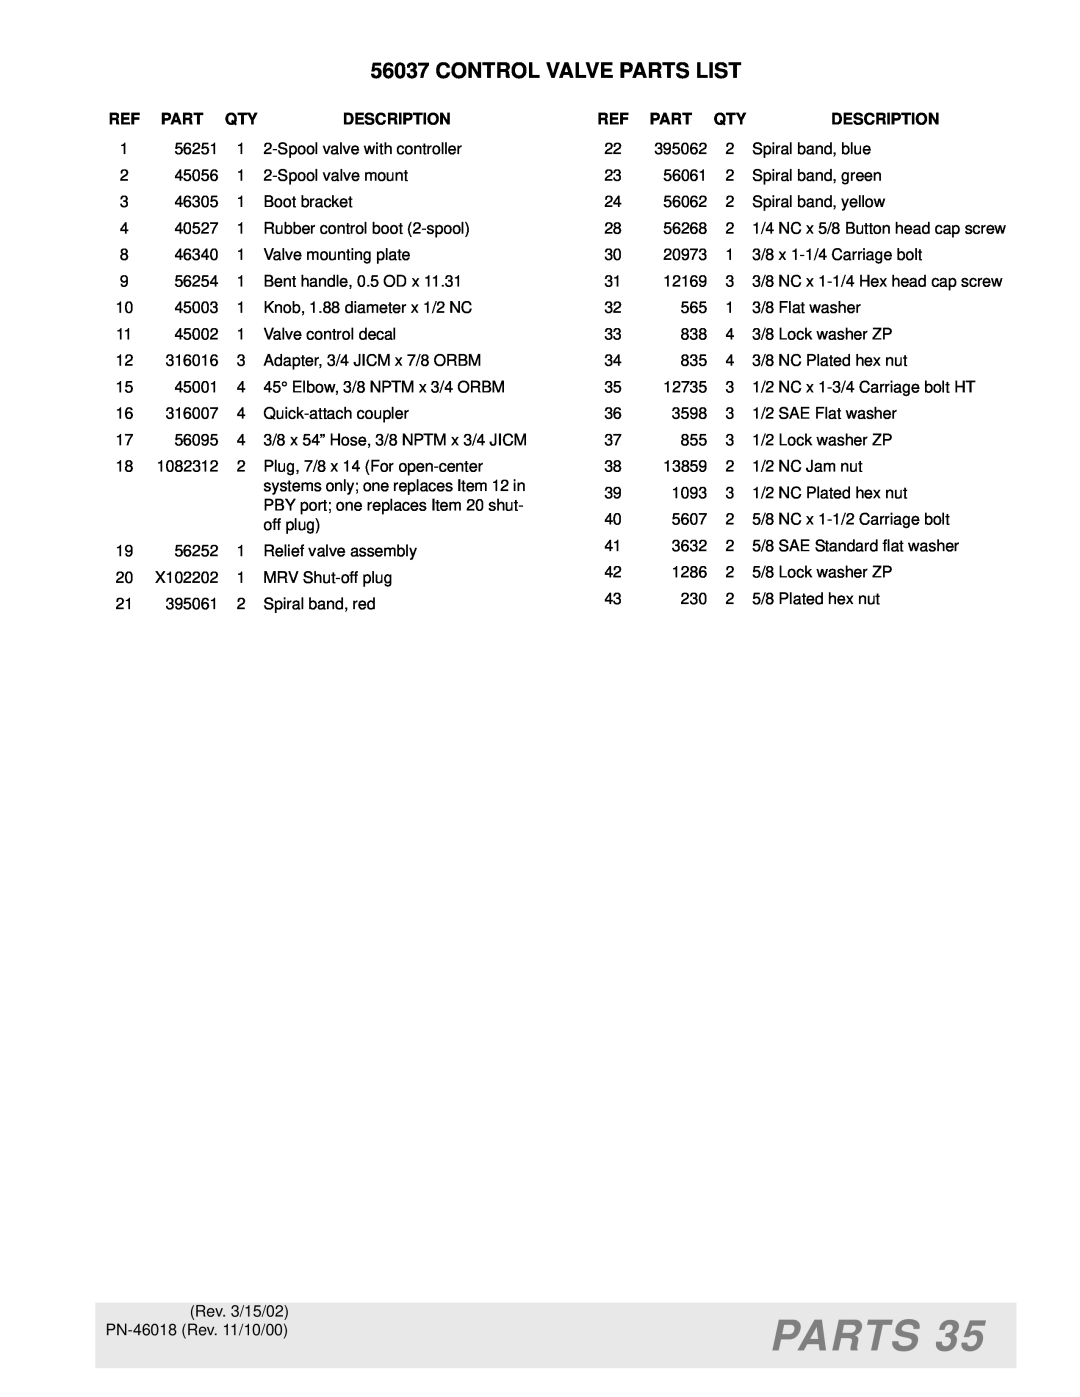 Woods Equipment M8200 manual Control Valve Parts List, 1/4 NC x 5/8 Button head cap screw 